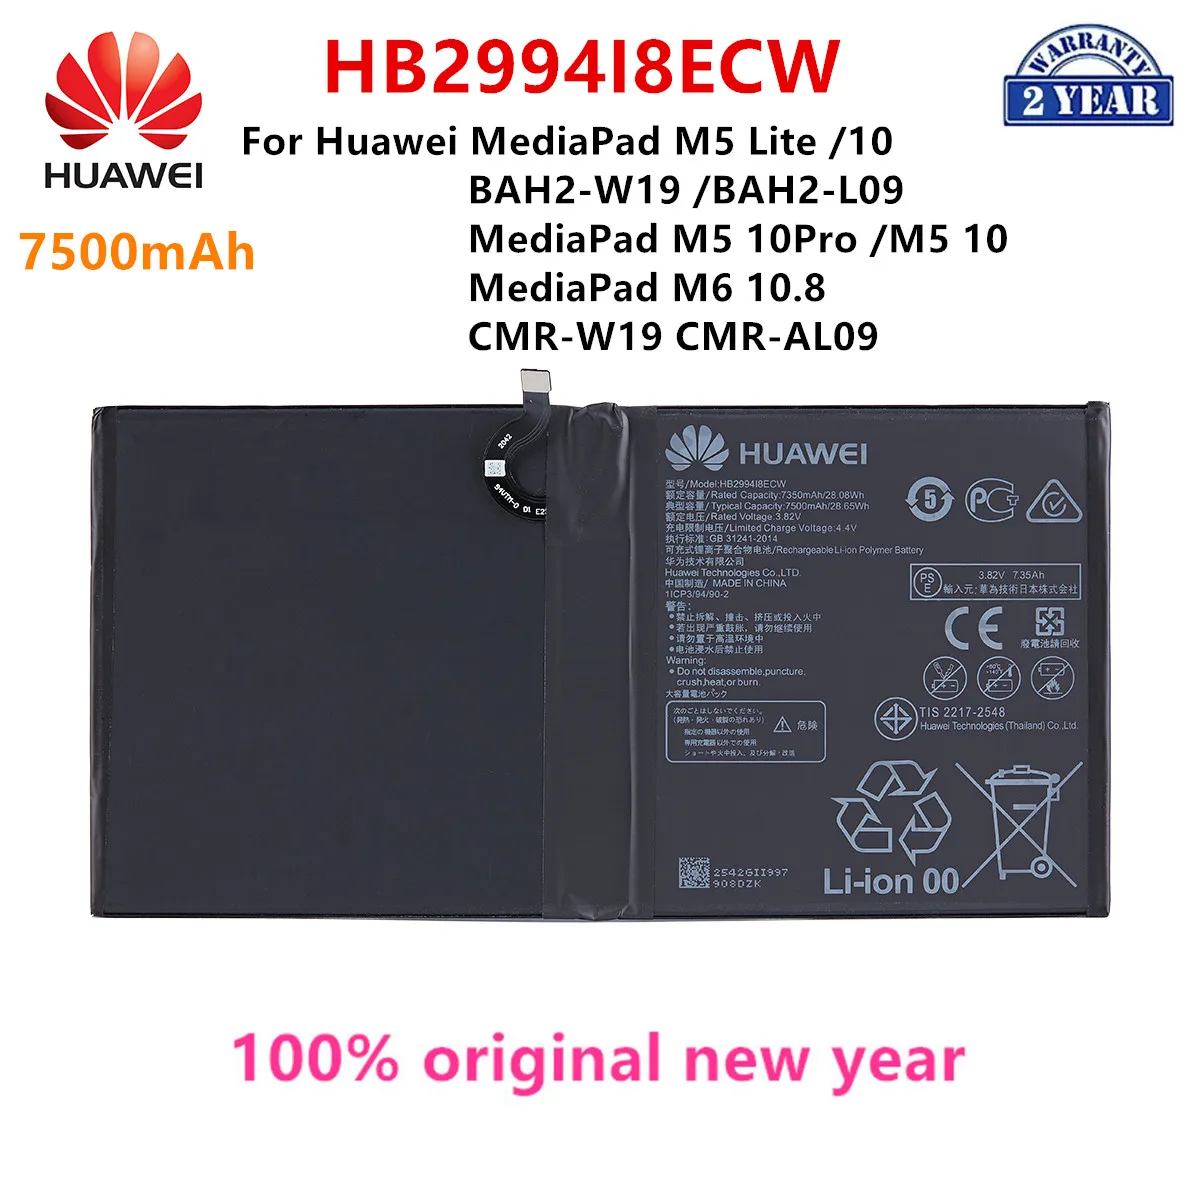 100 % Orijinal HB299418ECW 7500mAh Tablet Telefon Pil İçin Huawei MediaPad M6 10.8 M5 LİTE M5 10 M5 10pro Yedek Piller